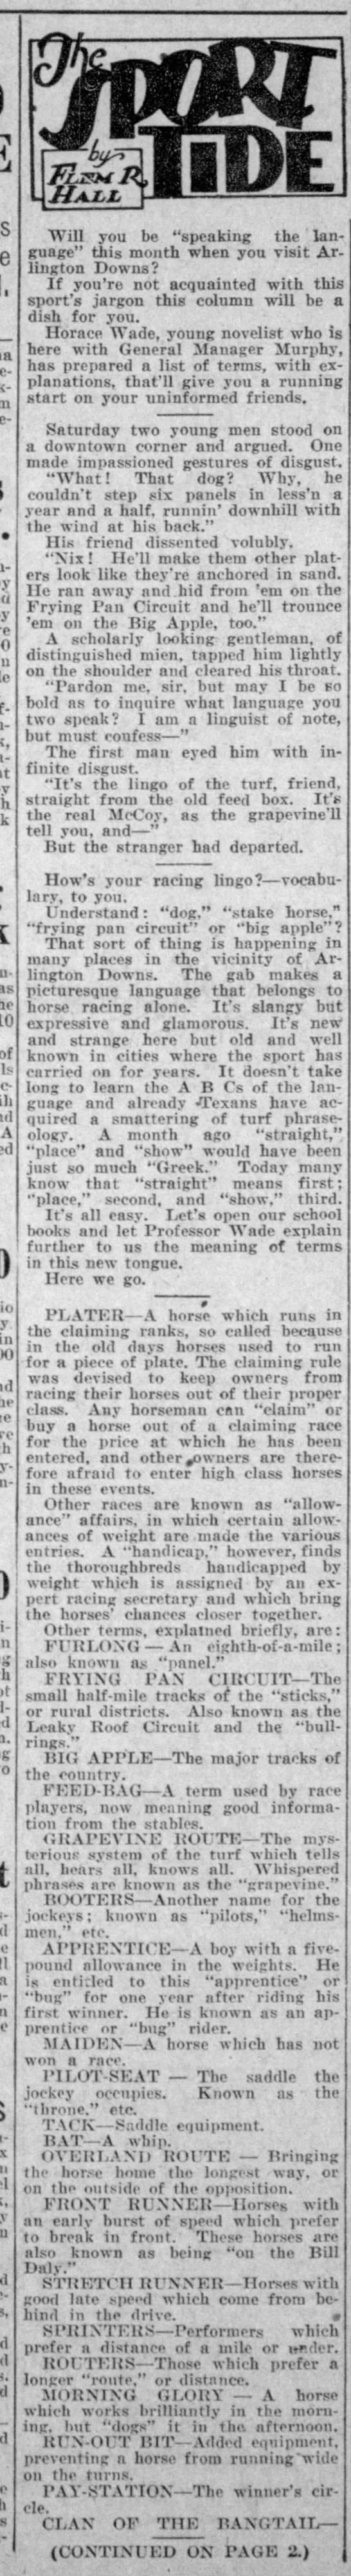 Horse racing slang lexicon, including "Big Apple" (1933). - 